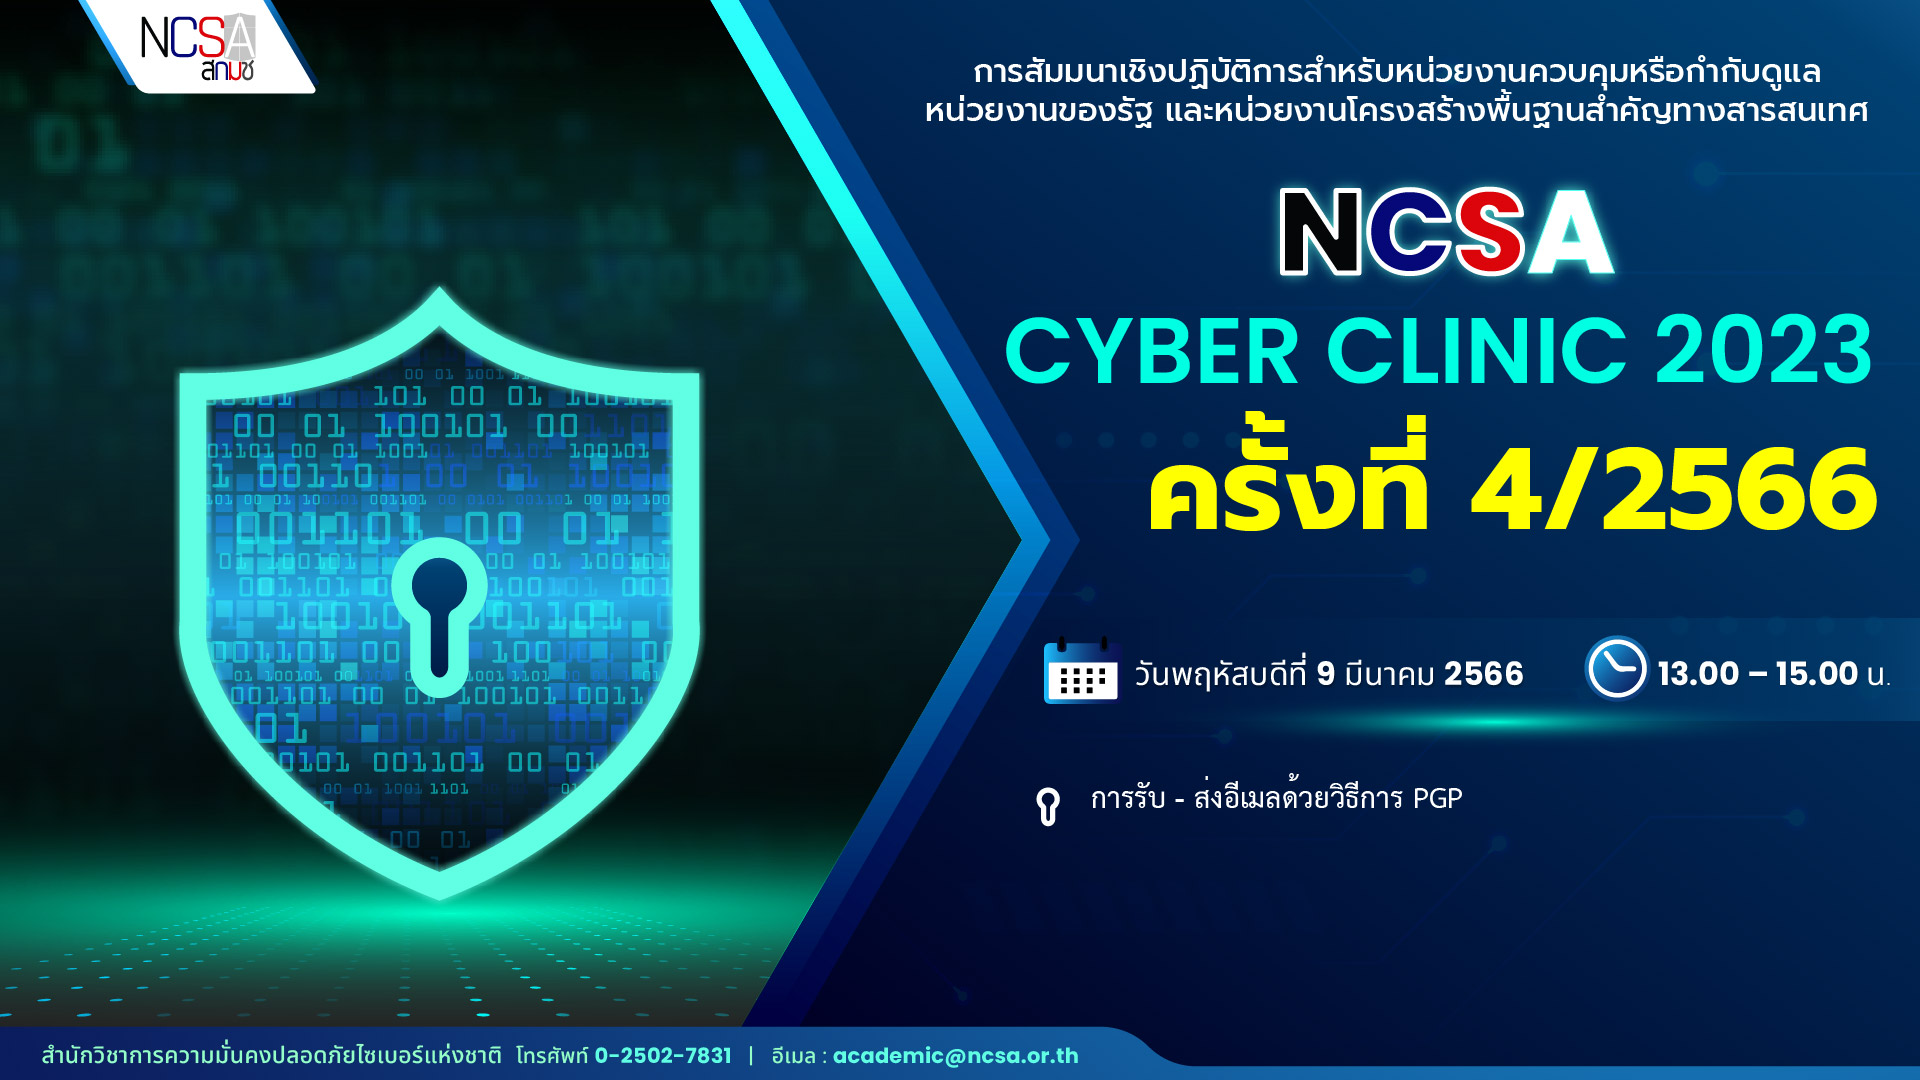 NCSA Cyber Clinic 2023 ครั้งที่ 4/2566